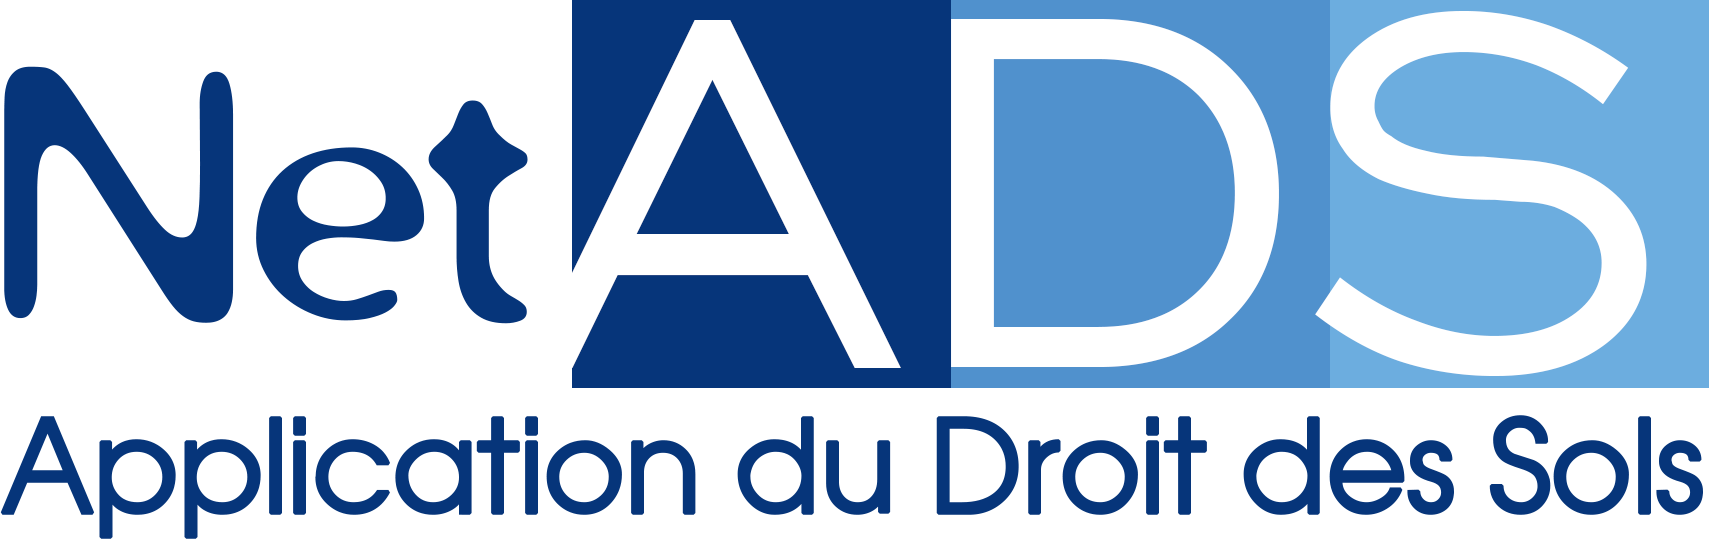 Logo NetADS